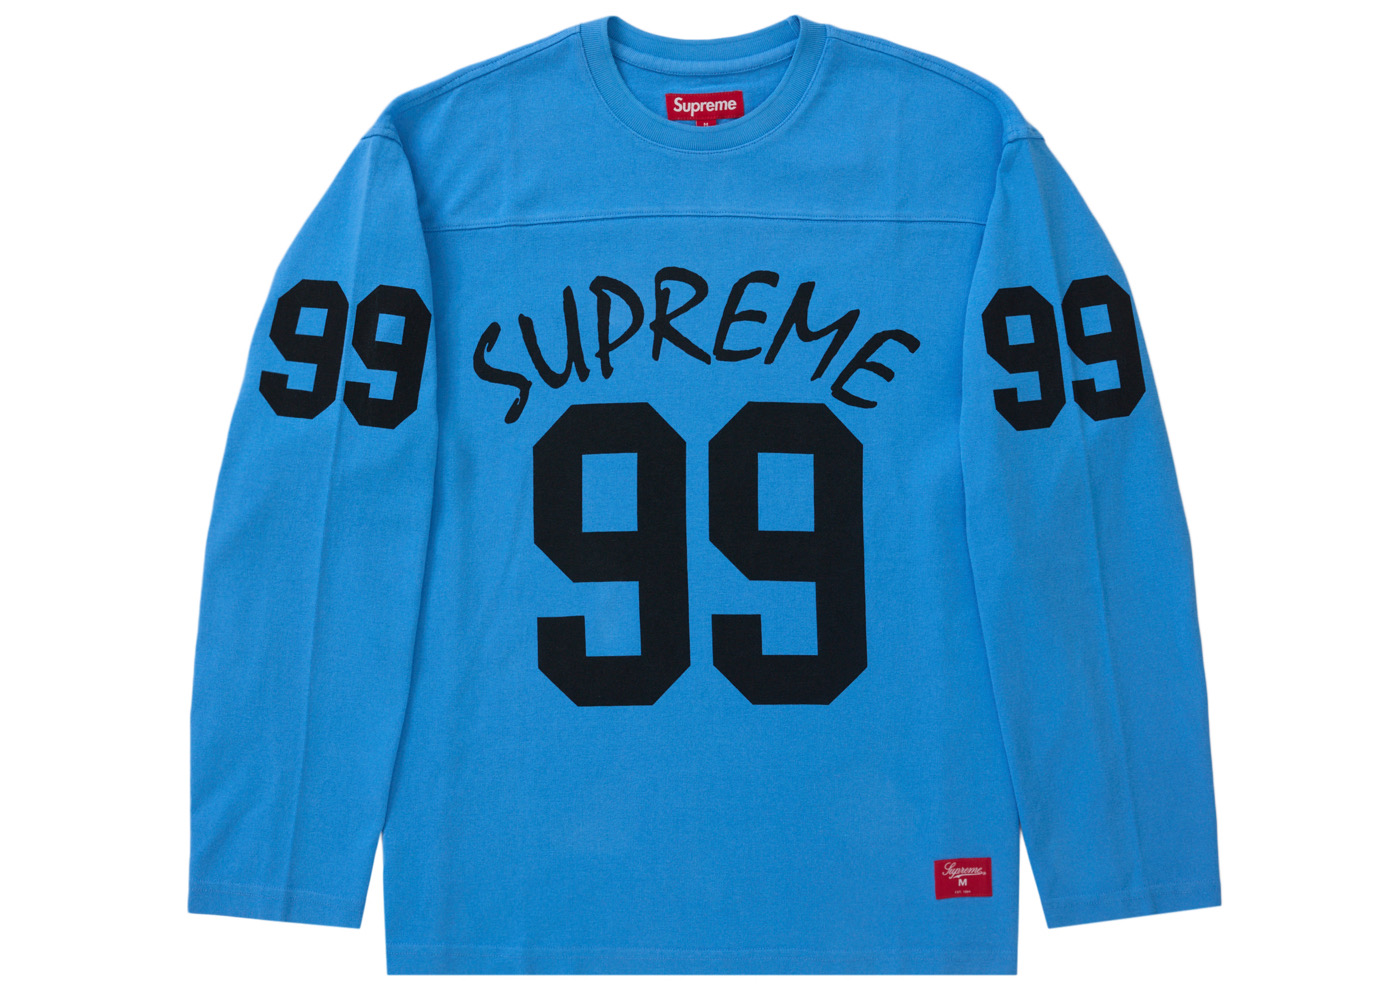 Supreme 99 L/S Football Top Blue